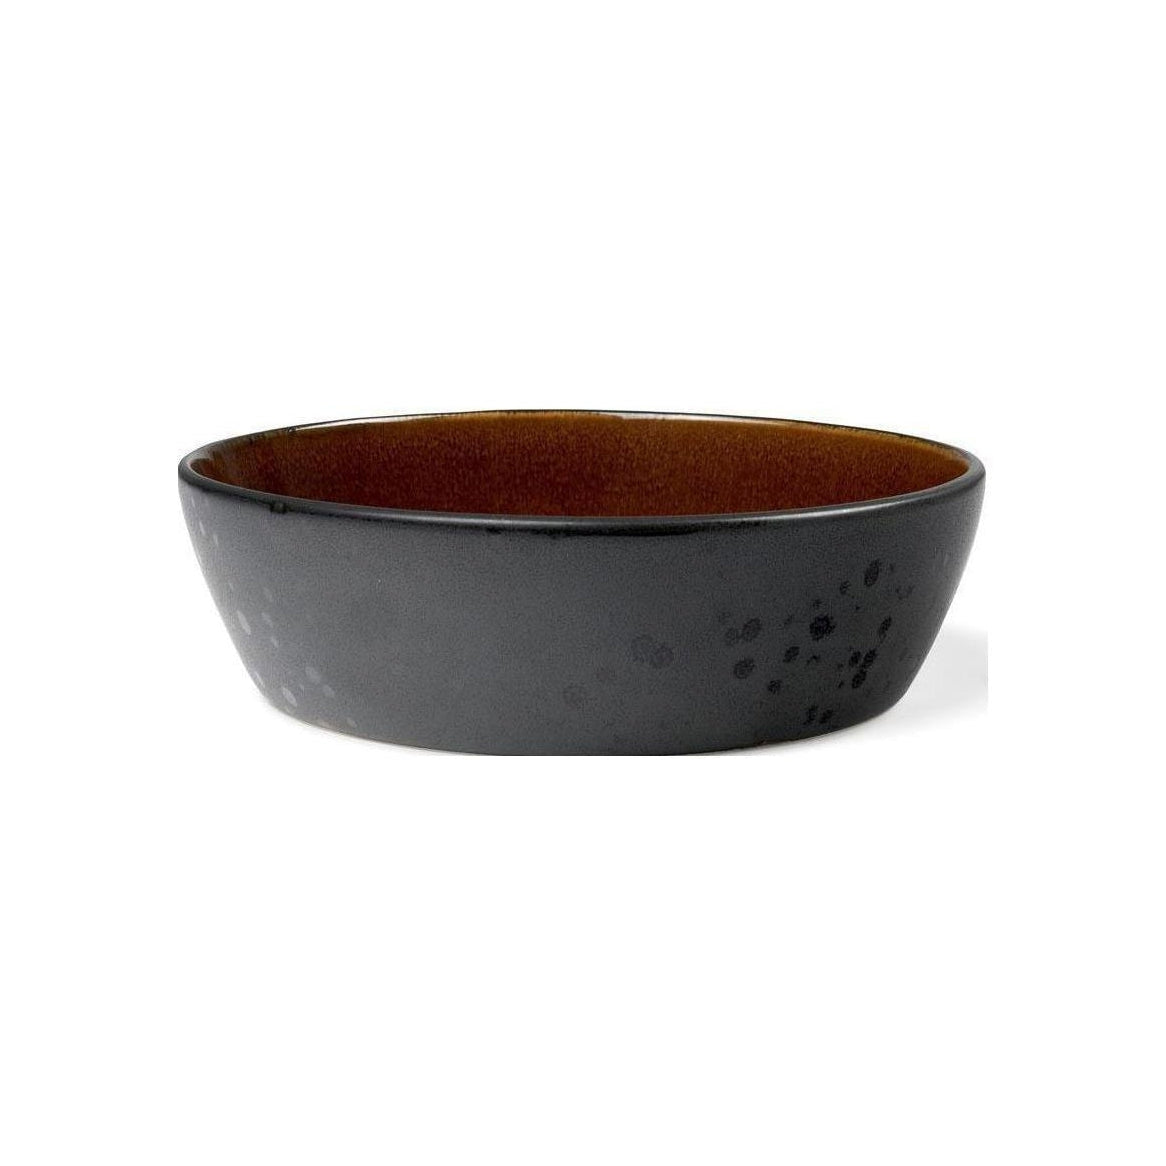 Bitz Suppe skål, sort/rav, Ø 18 cm